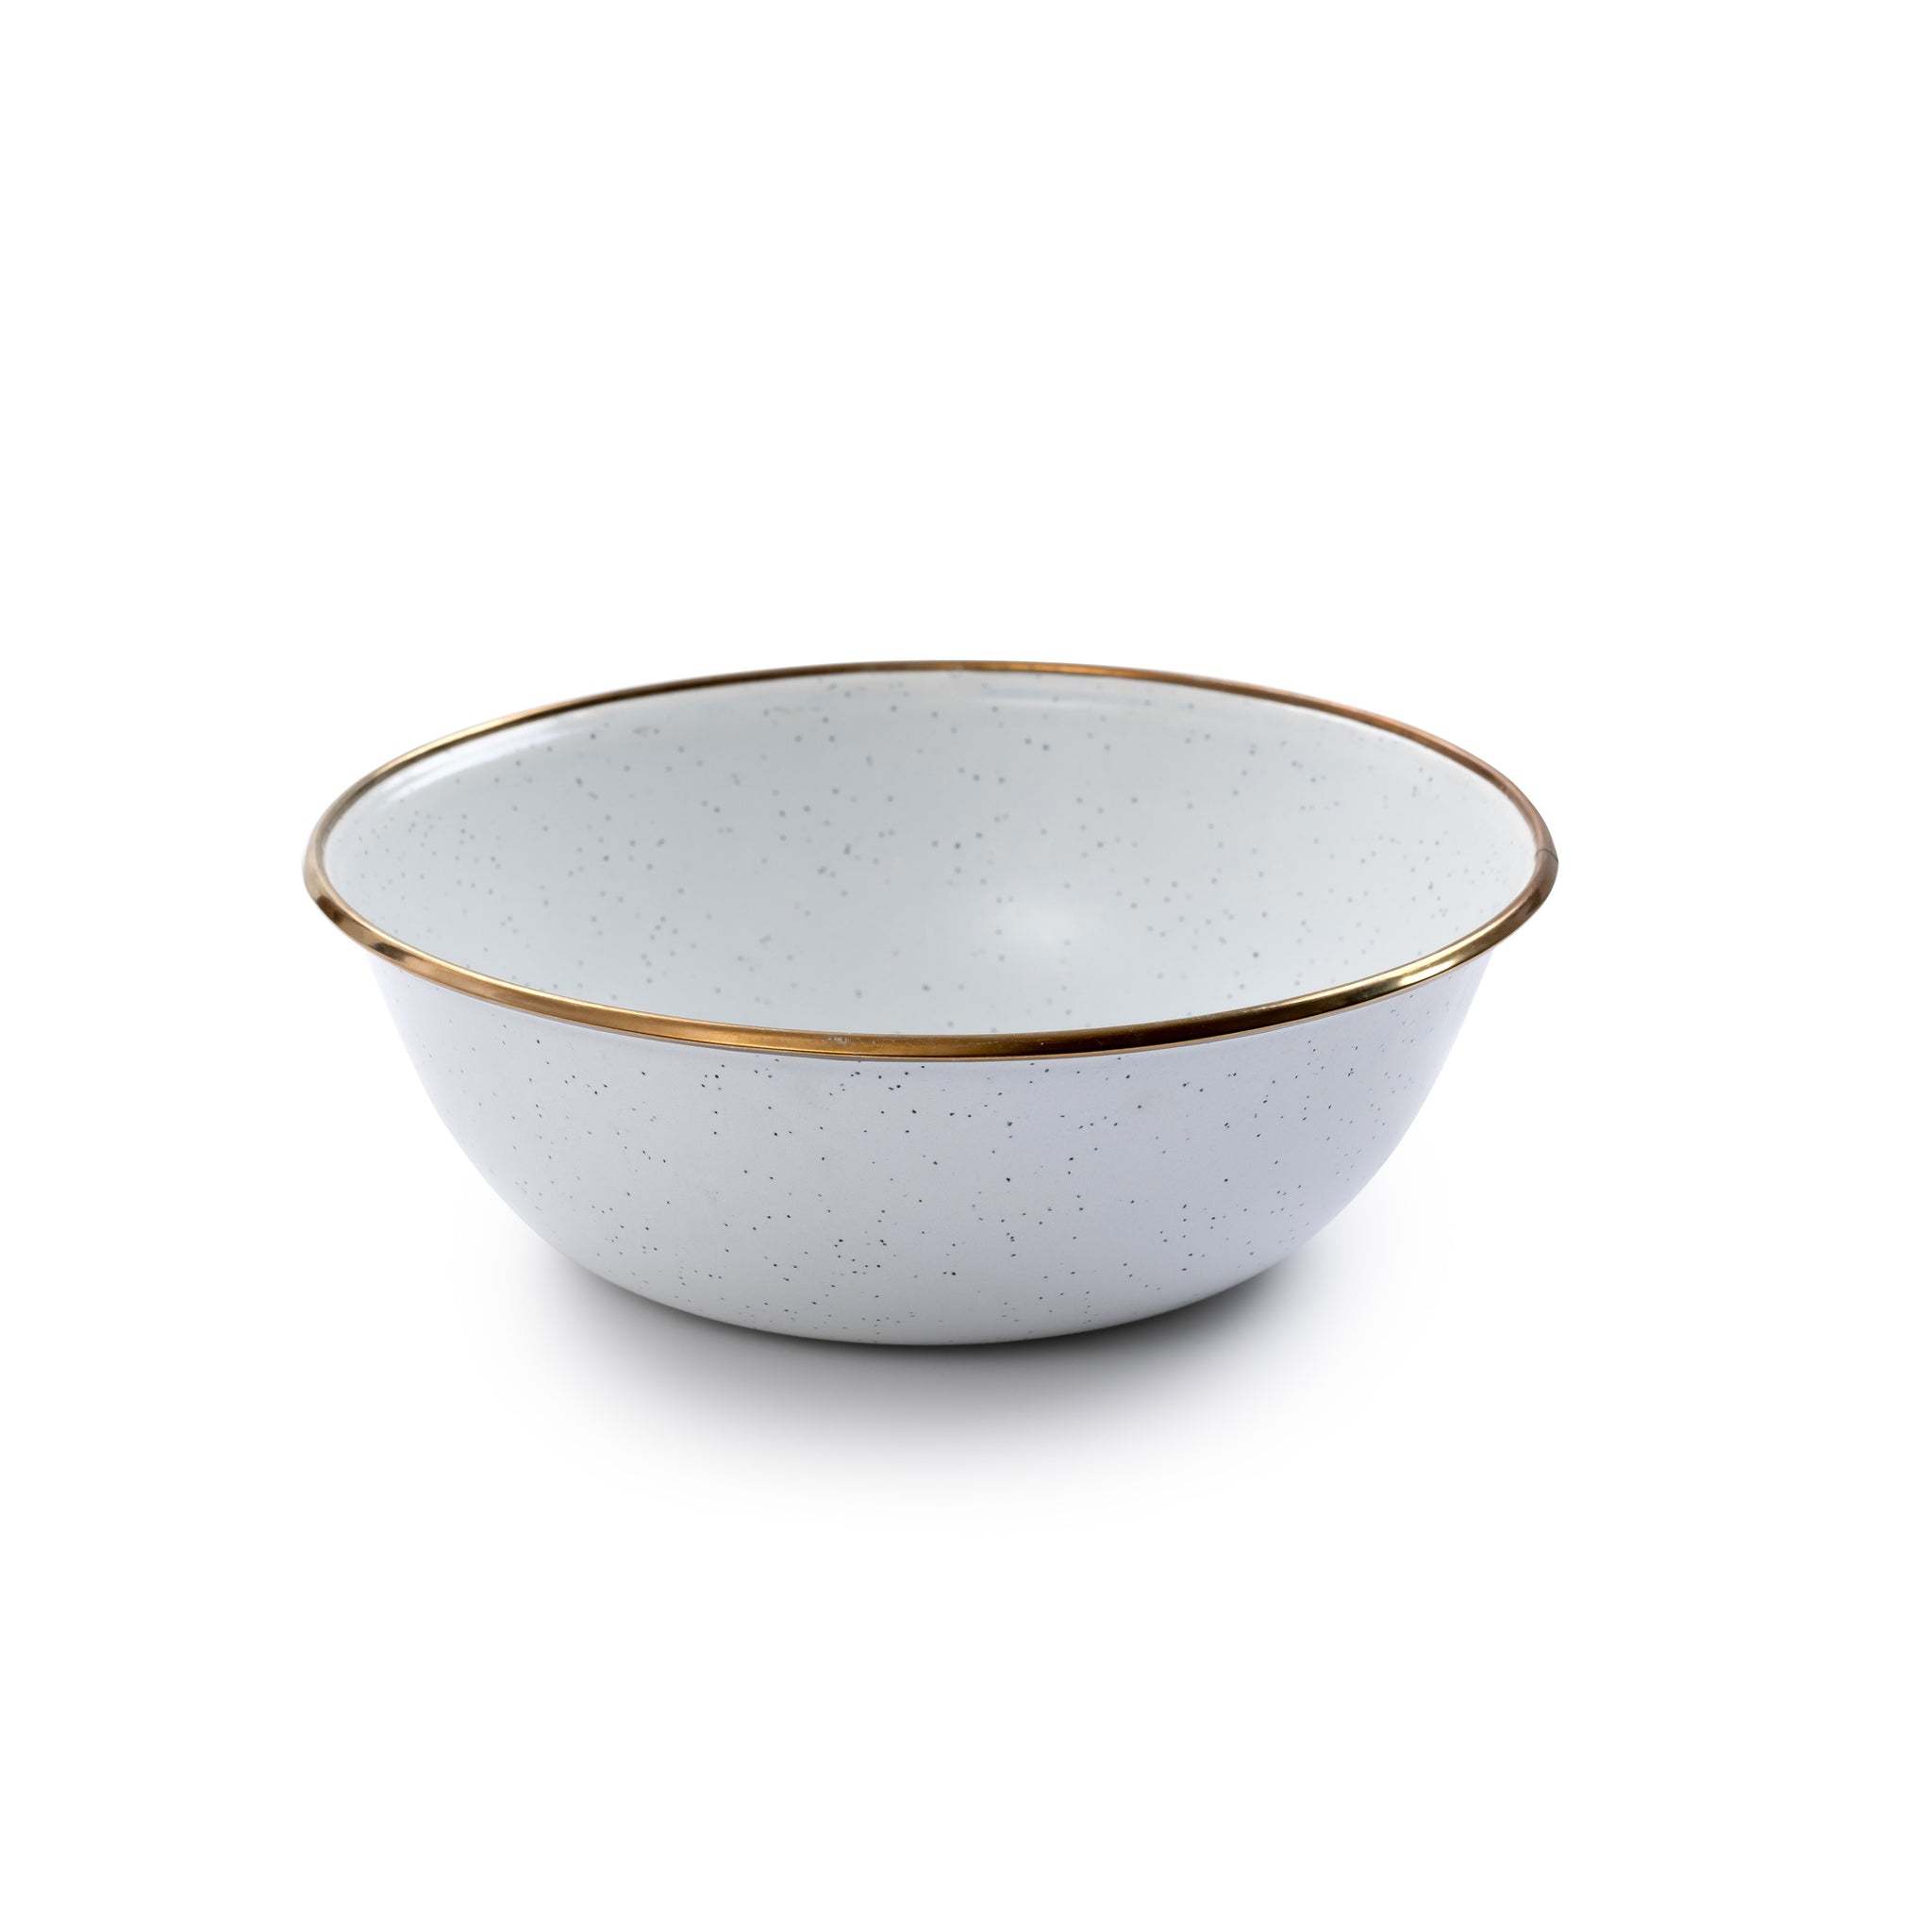 Barebones - Enamel bowls (set of 2)